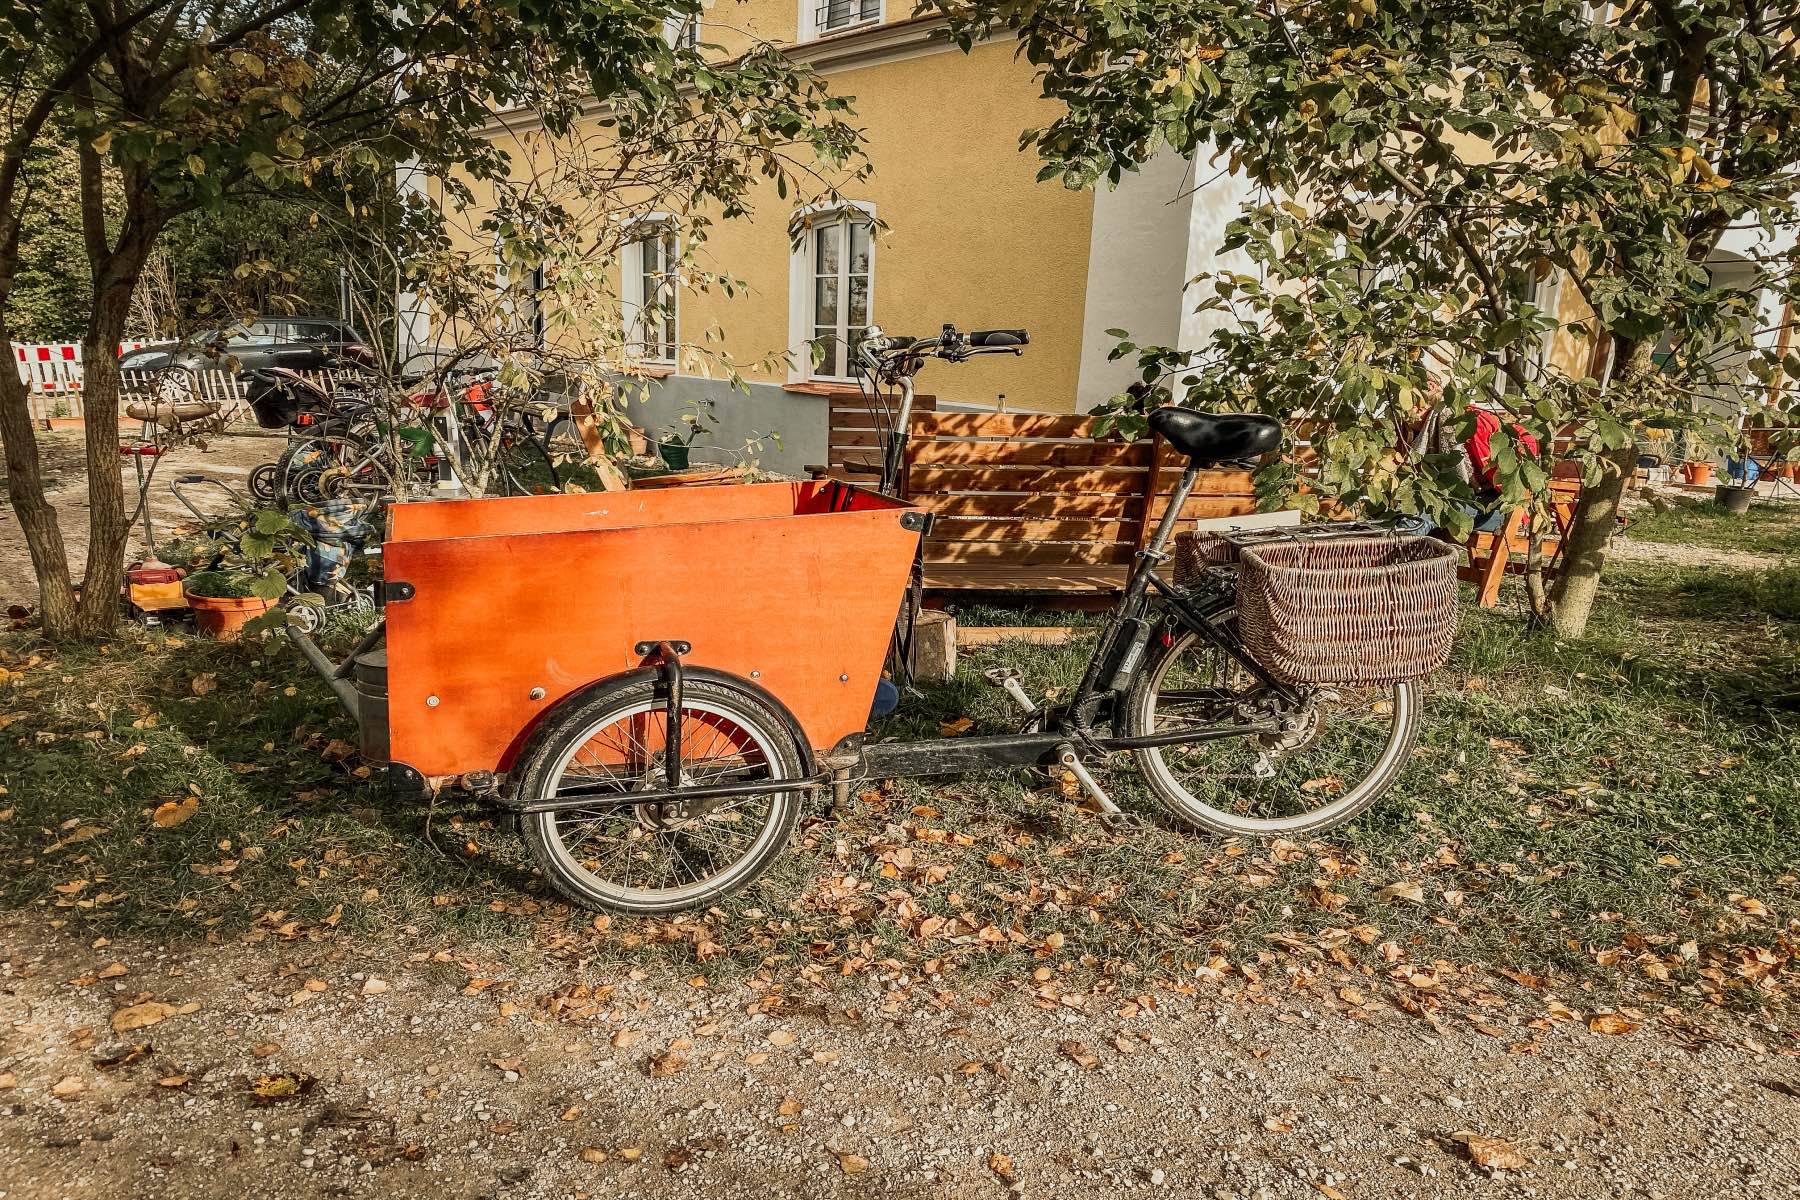 geheimtipp Augsburg fahrrad